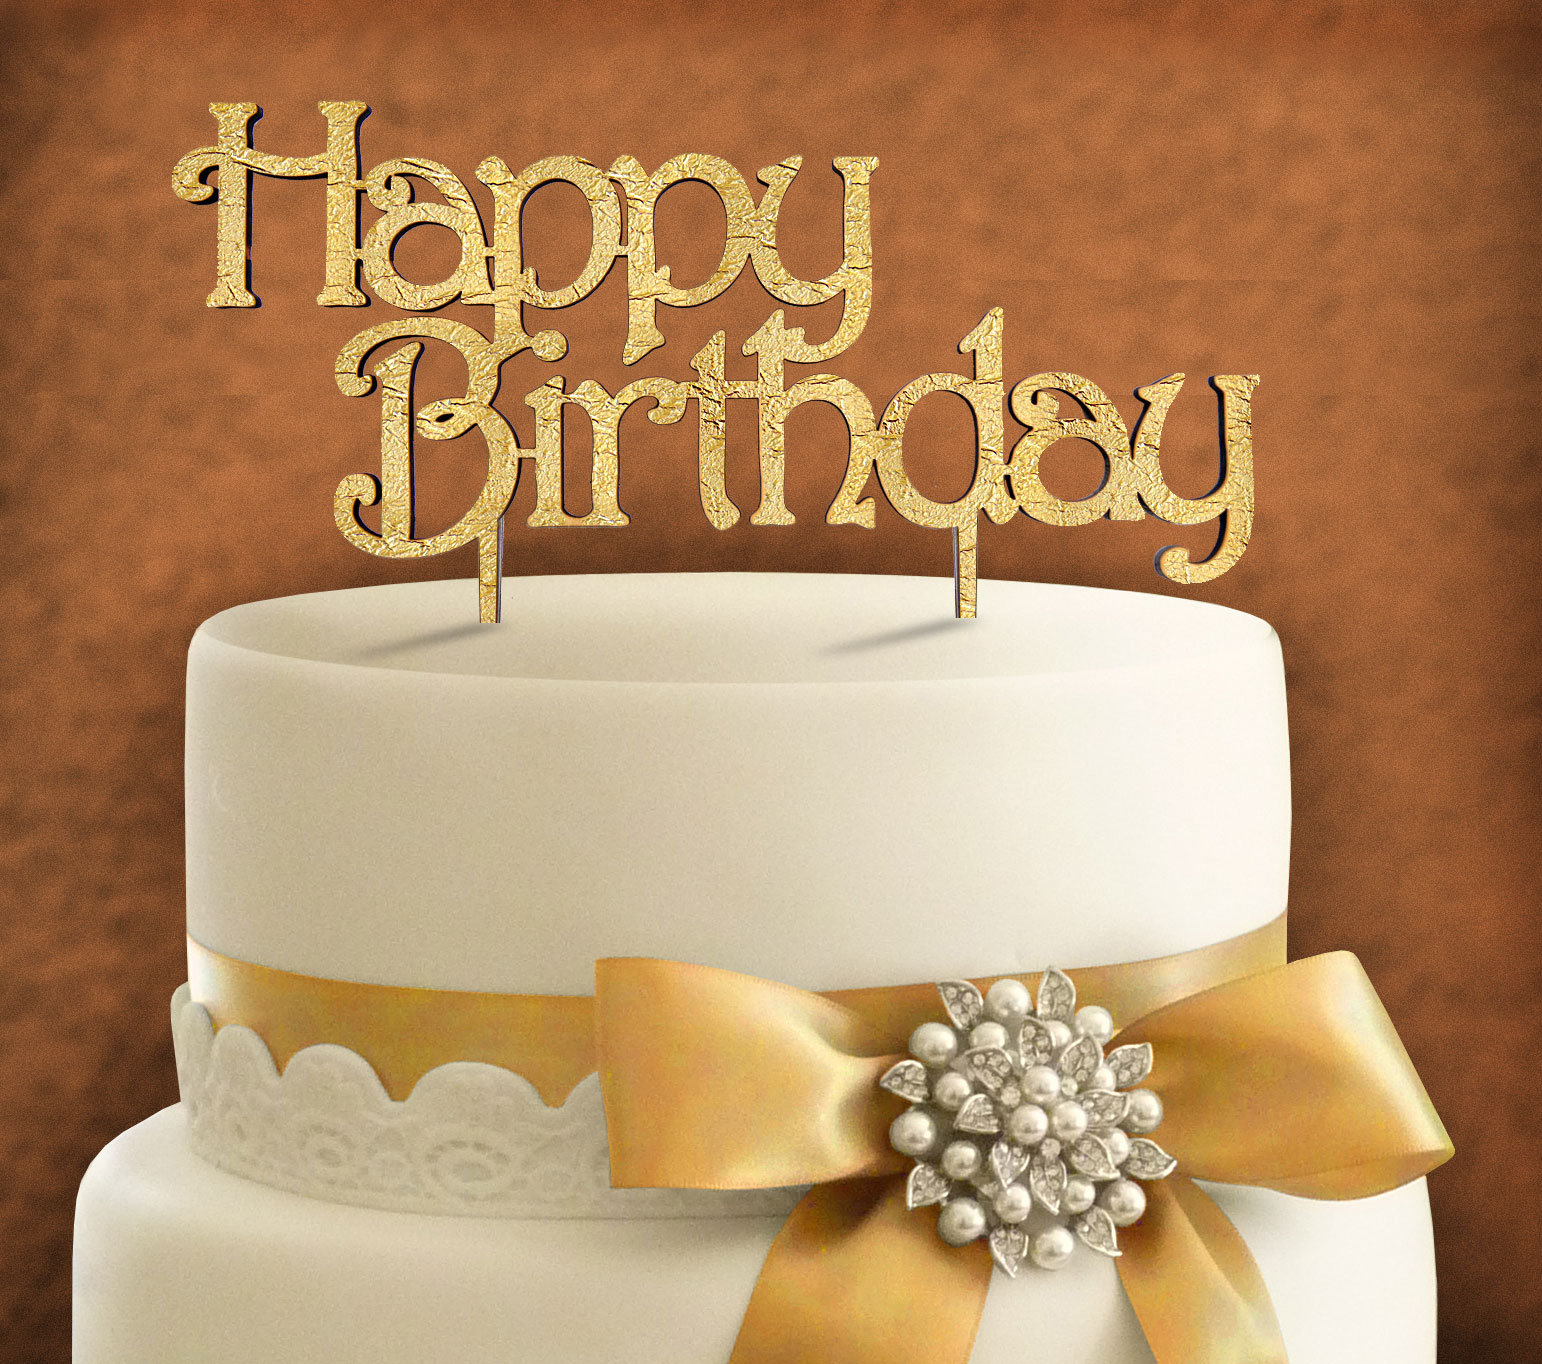 Happy Birthday Cake Topper aMonogram Art Unlimited Color: Geranium